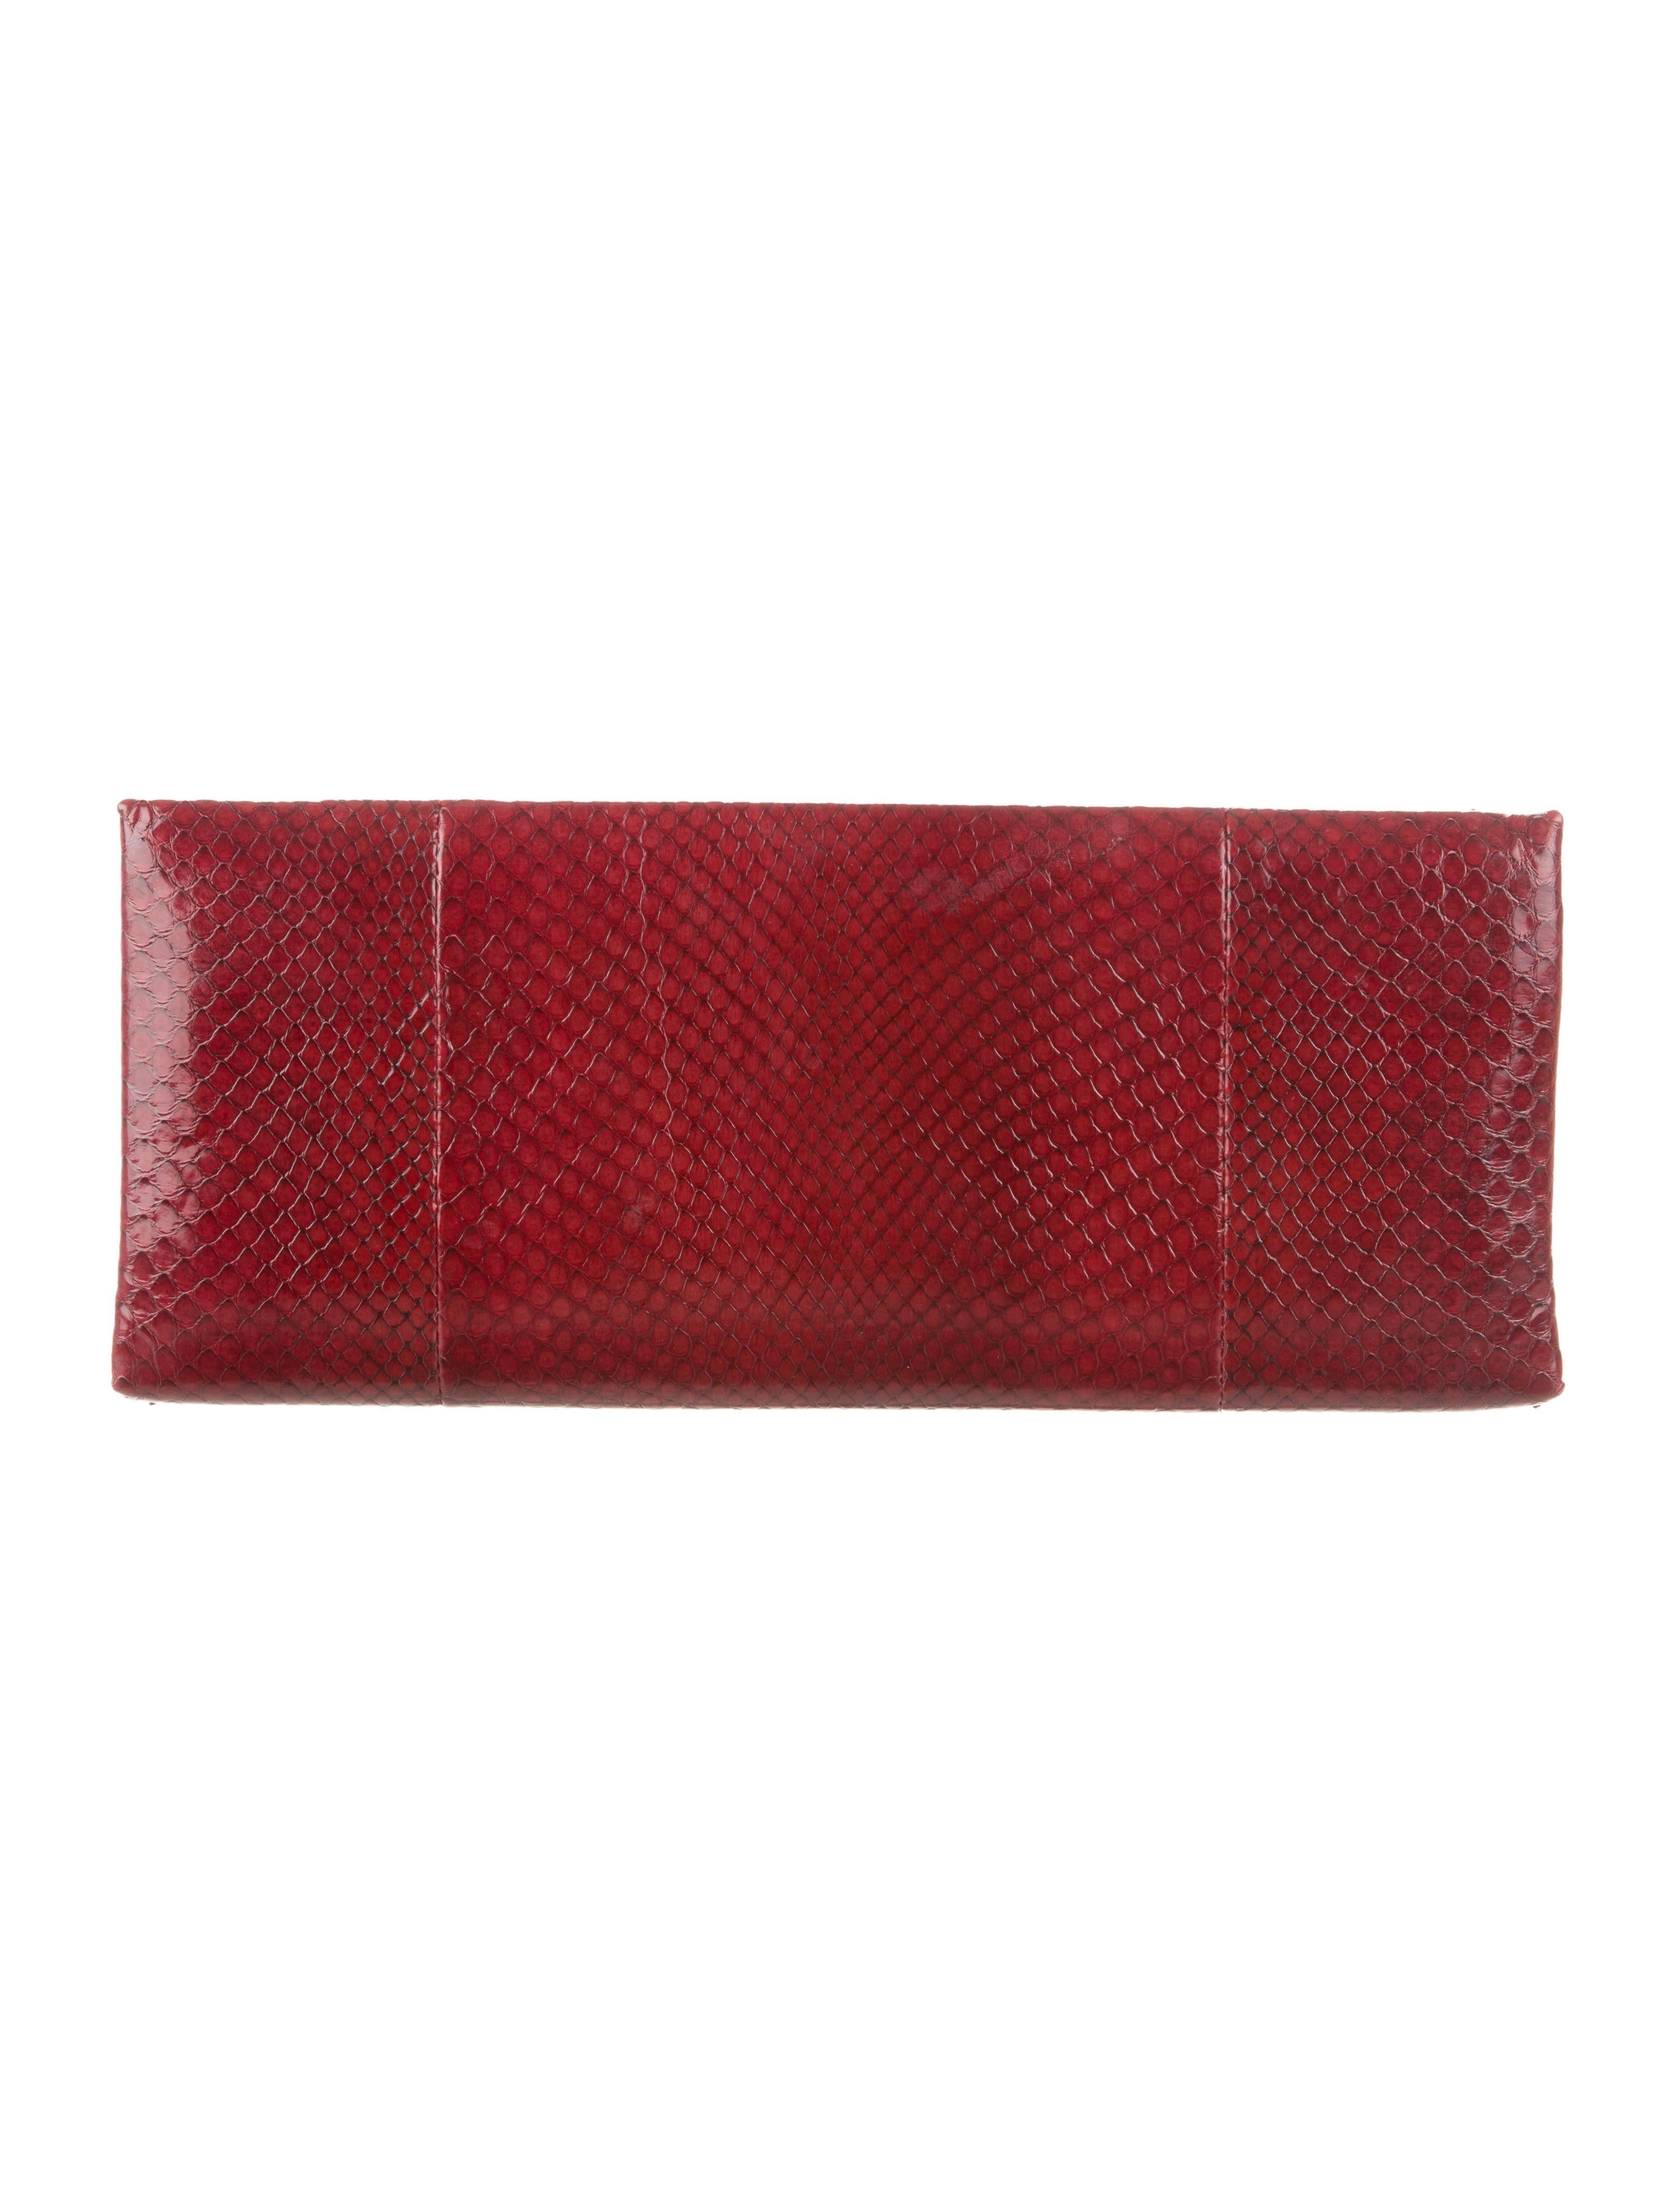 Pink Tom Ford Red Python Leather Gold Snake Hardware Evening Clutch Bag